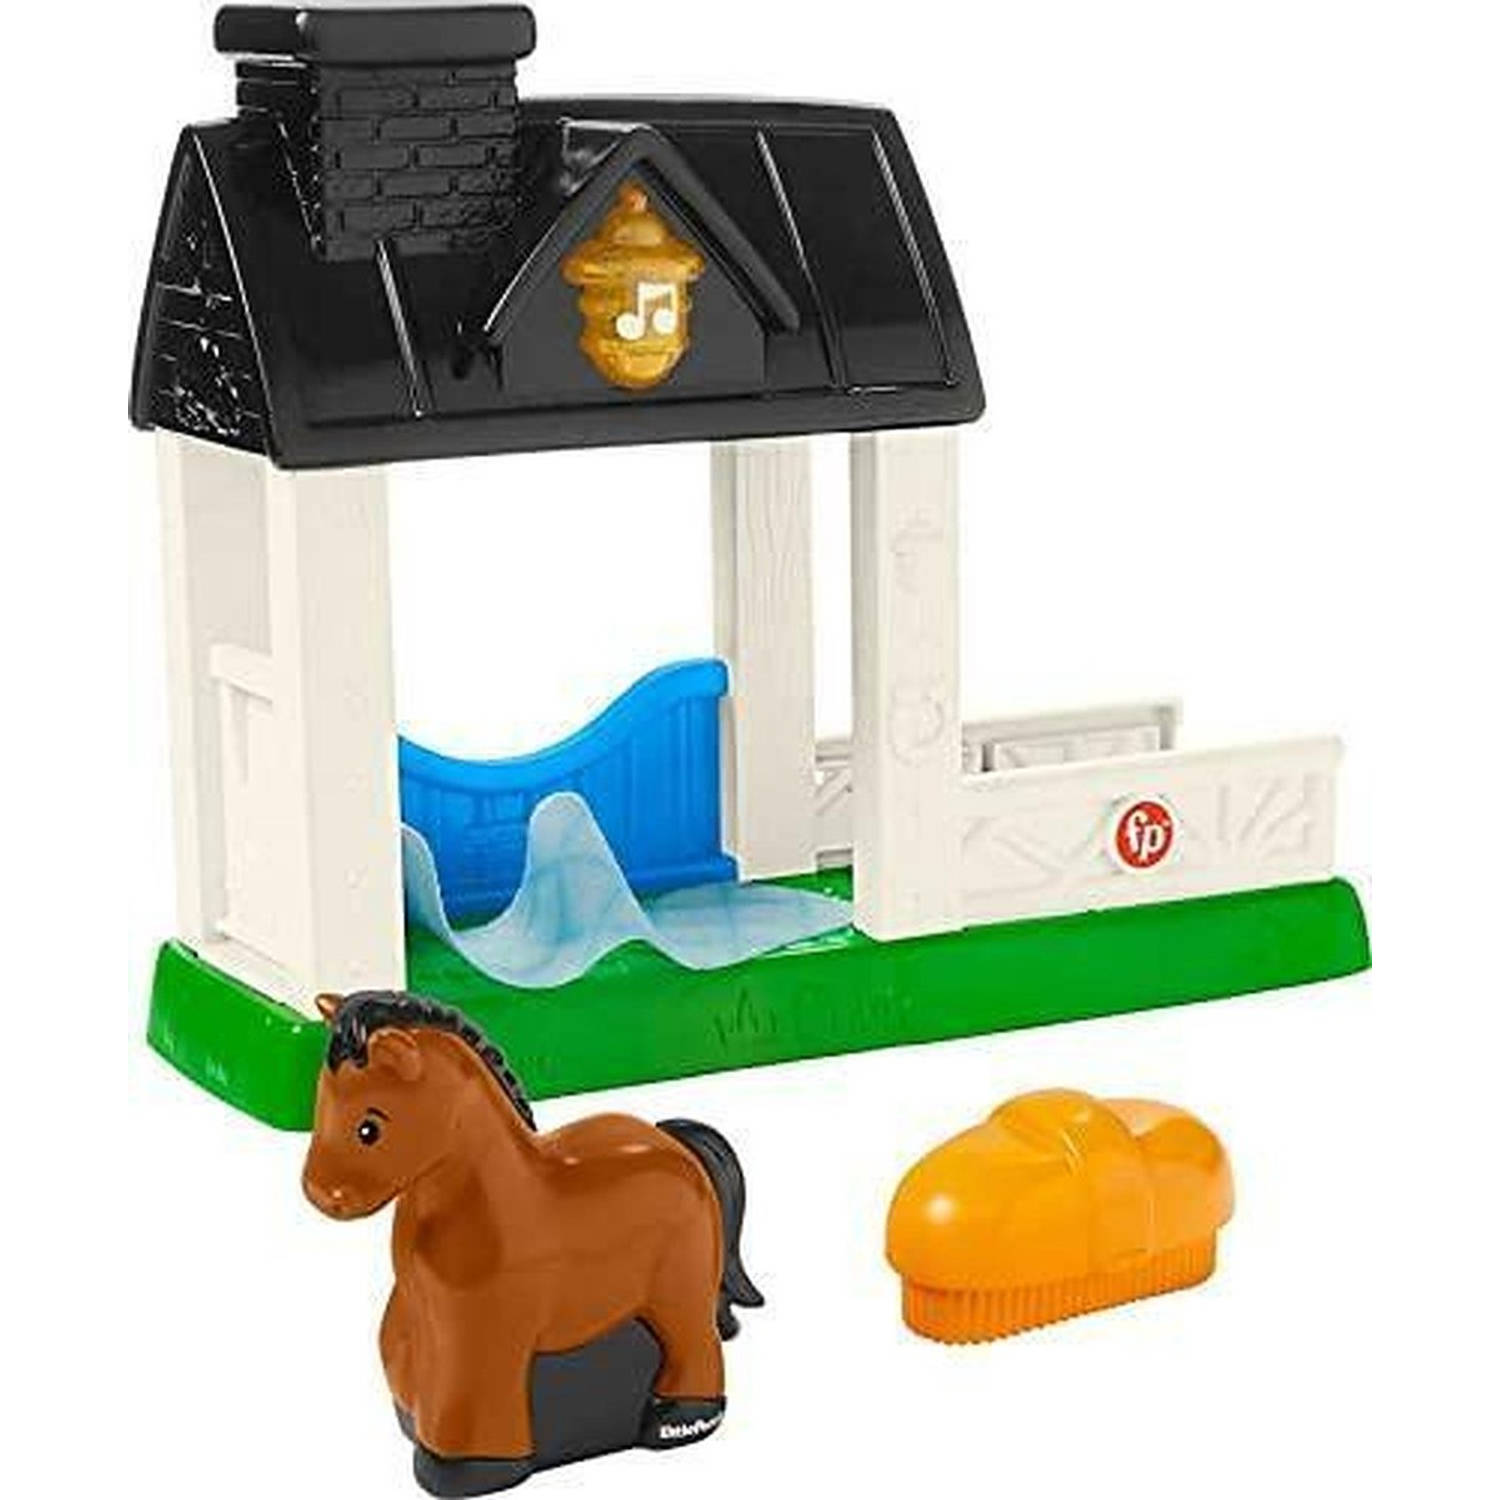 Fisher Price Little People Speelset - Paardenstal inclusief Paard Speelfiguur